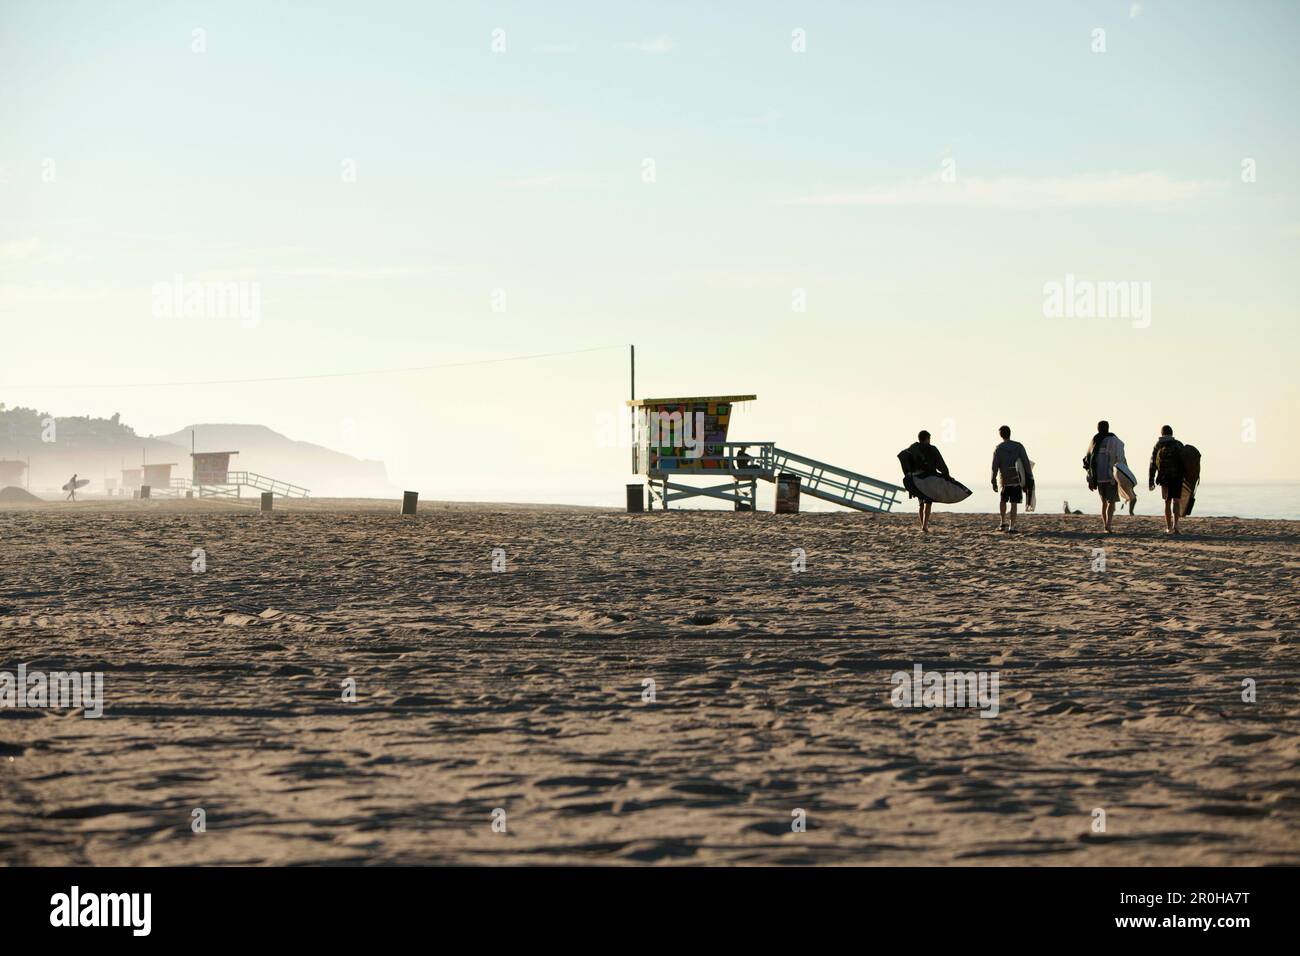 USA, California, Malibu, surfers walk across the sand towards the water at Zuma Beach Stock Photo